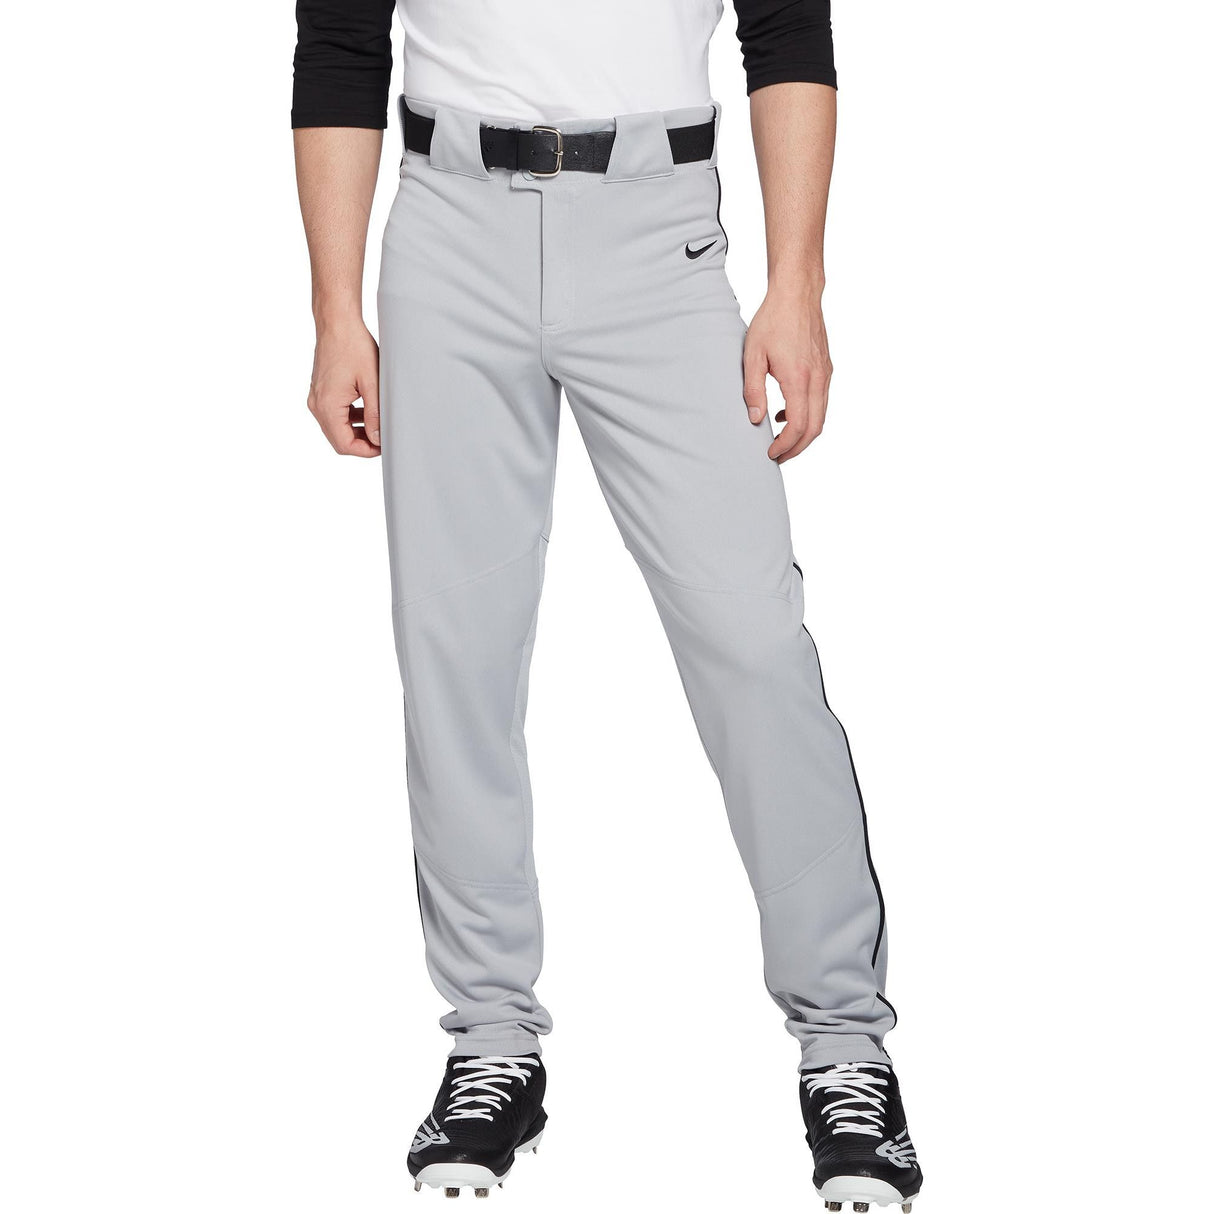 Nike Women's Vapor Select Softball Pants, XL, Black